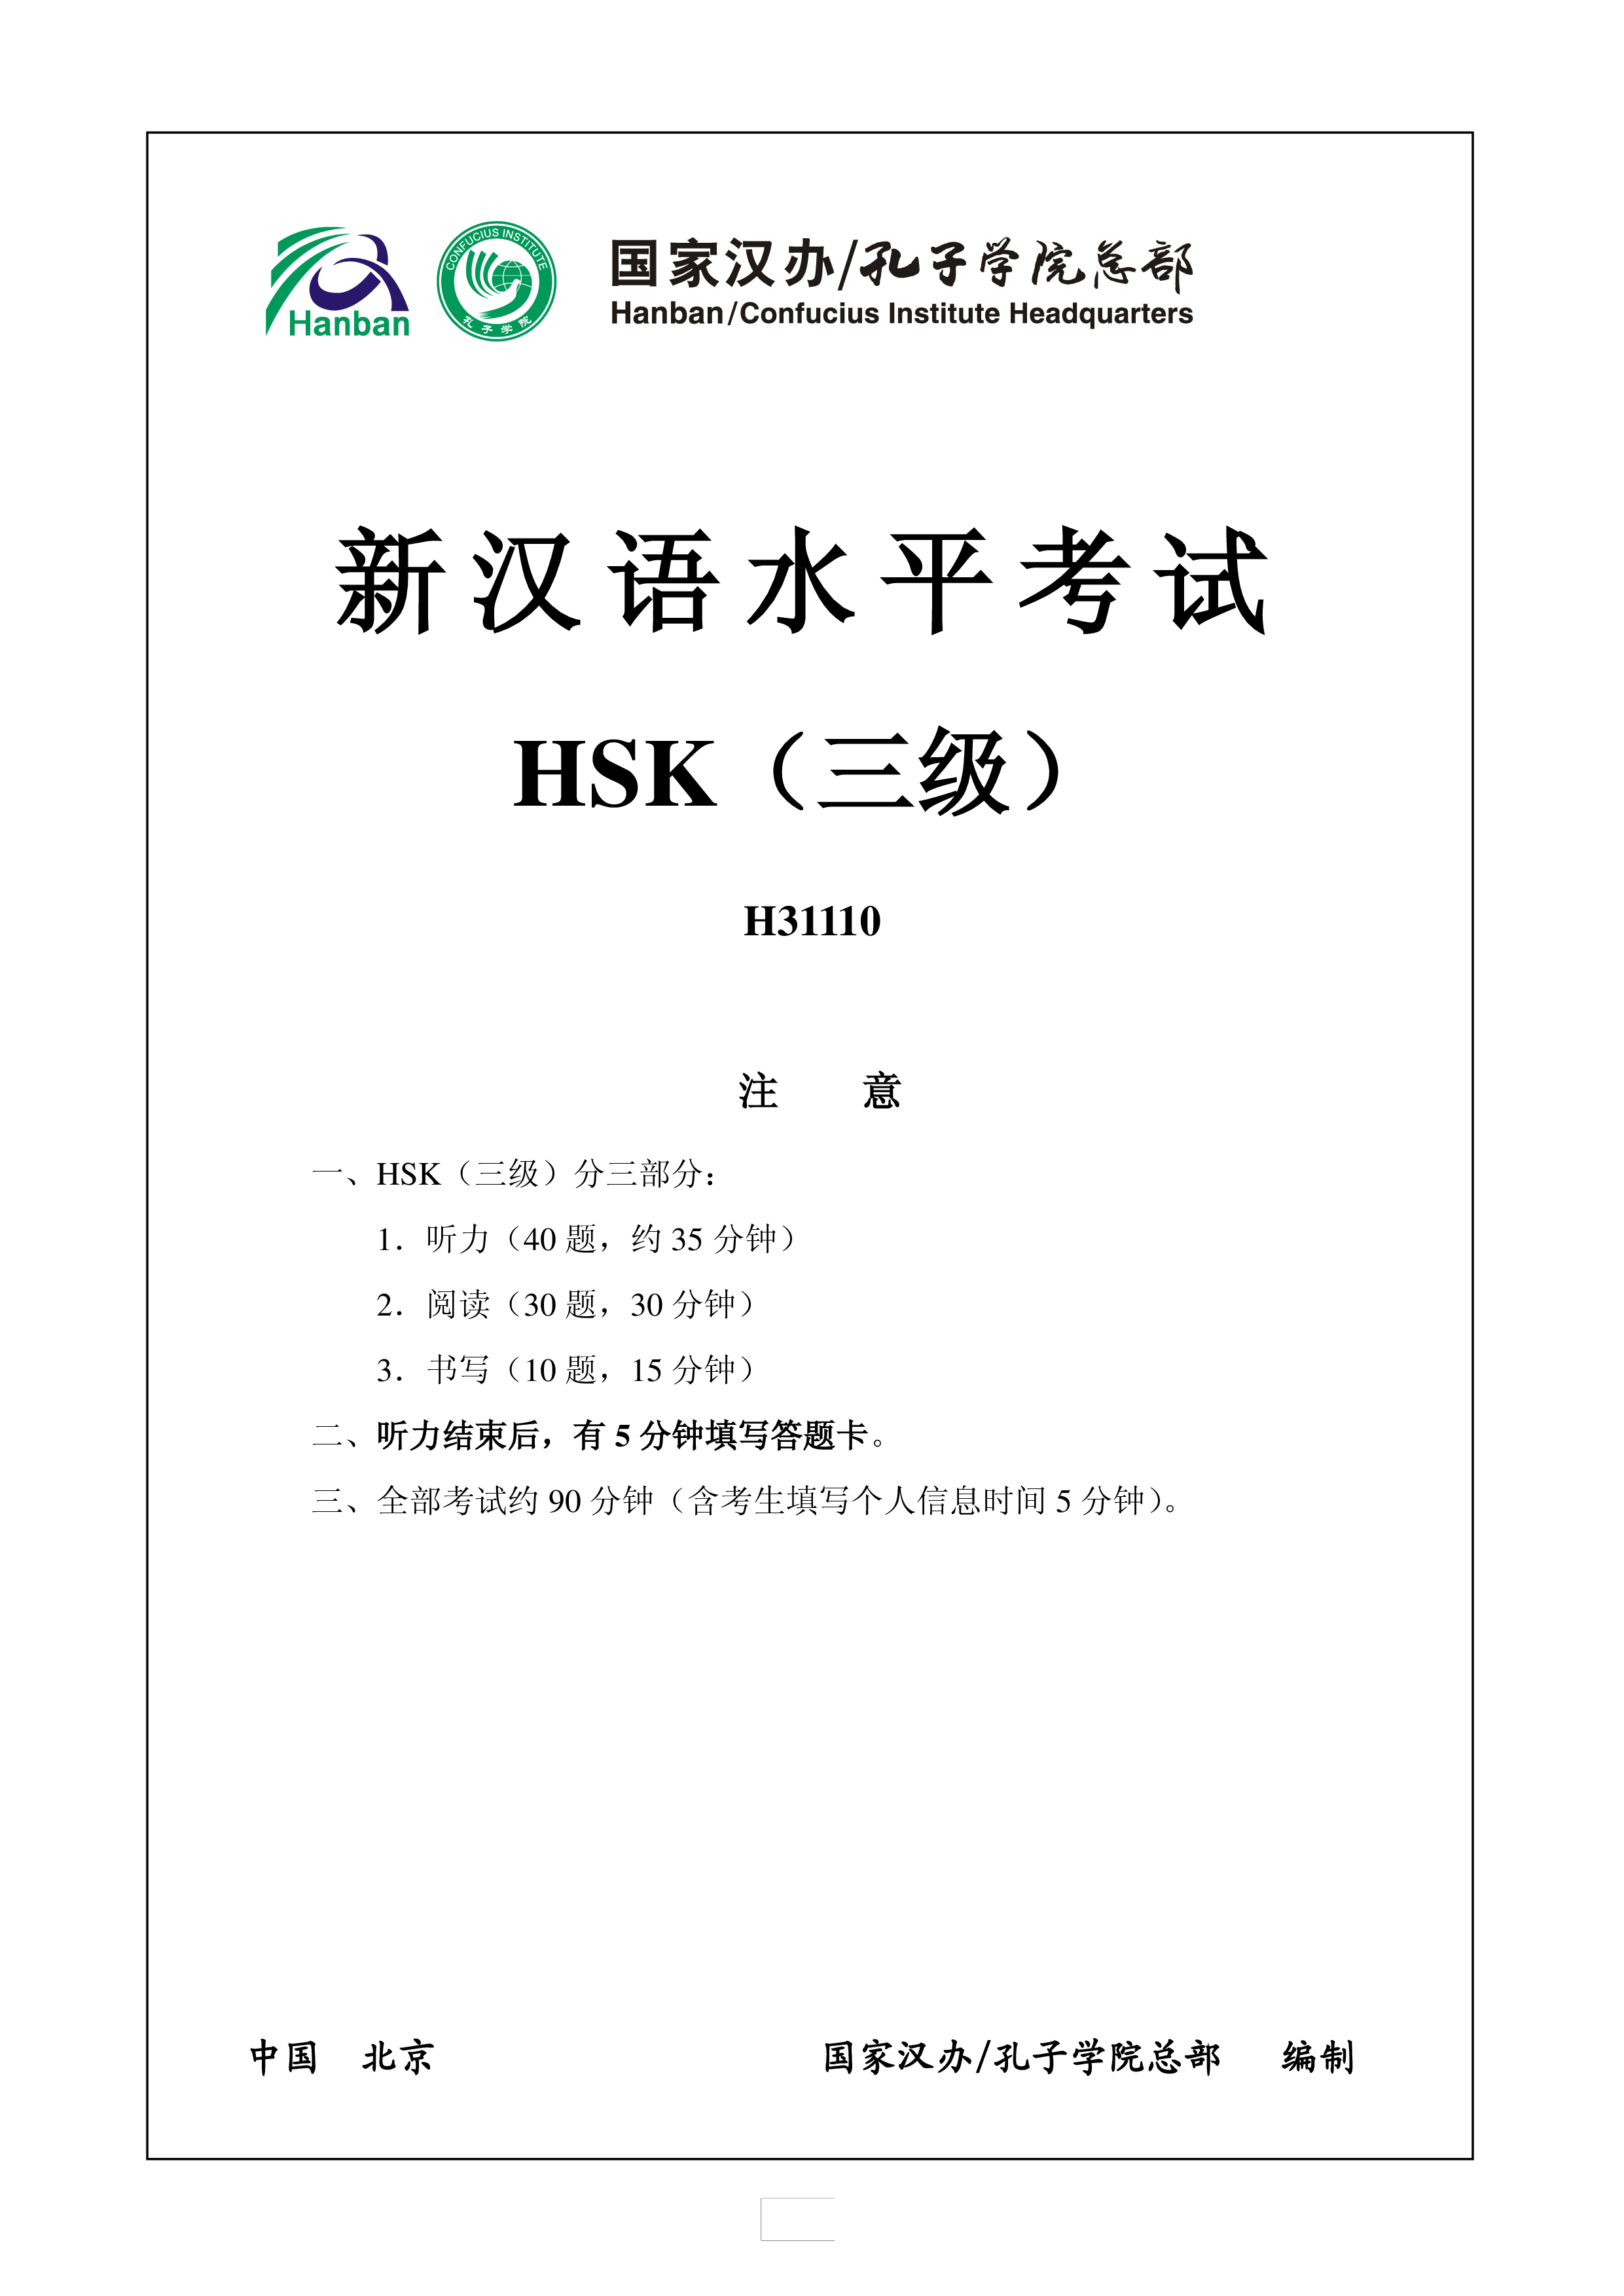 HSK 3 H31110 Exam Paper main image